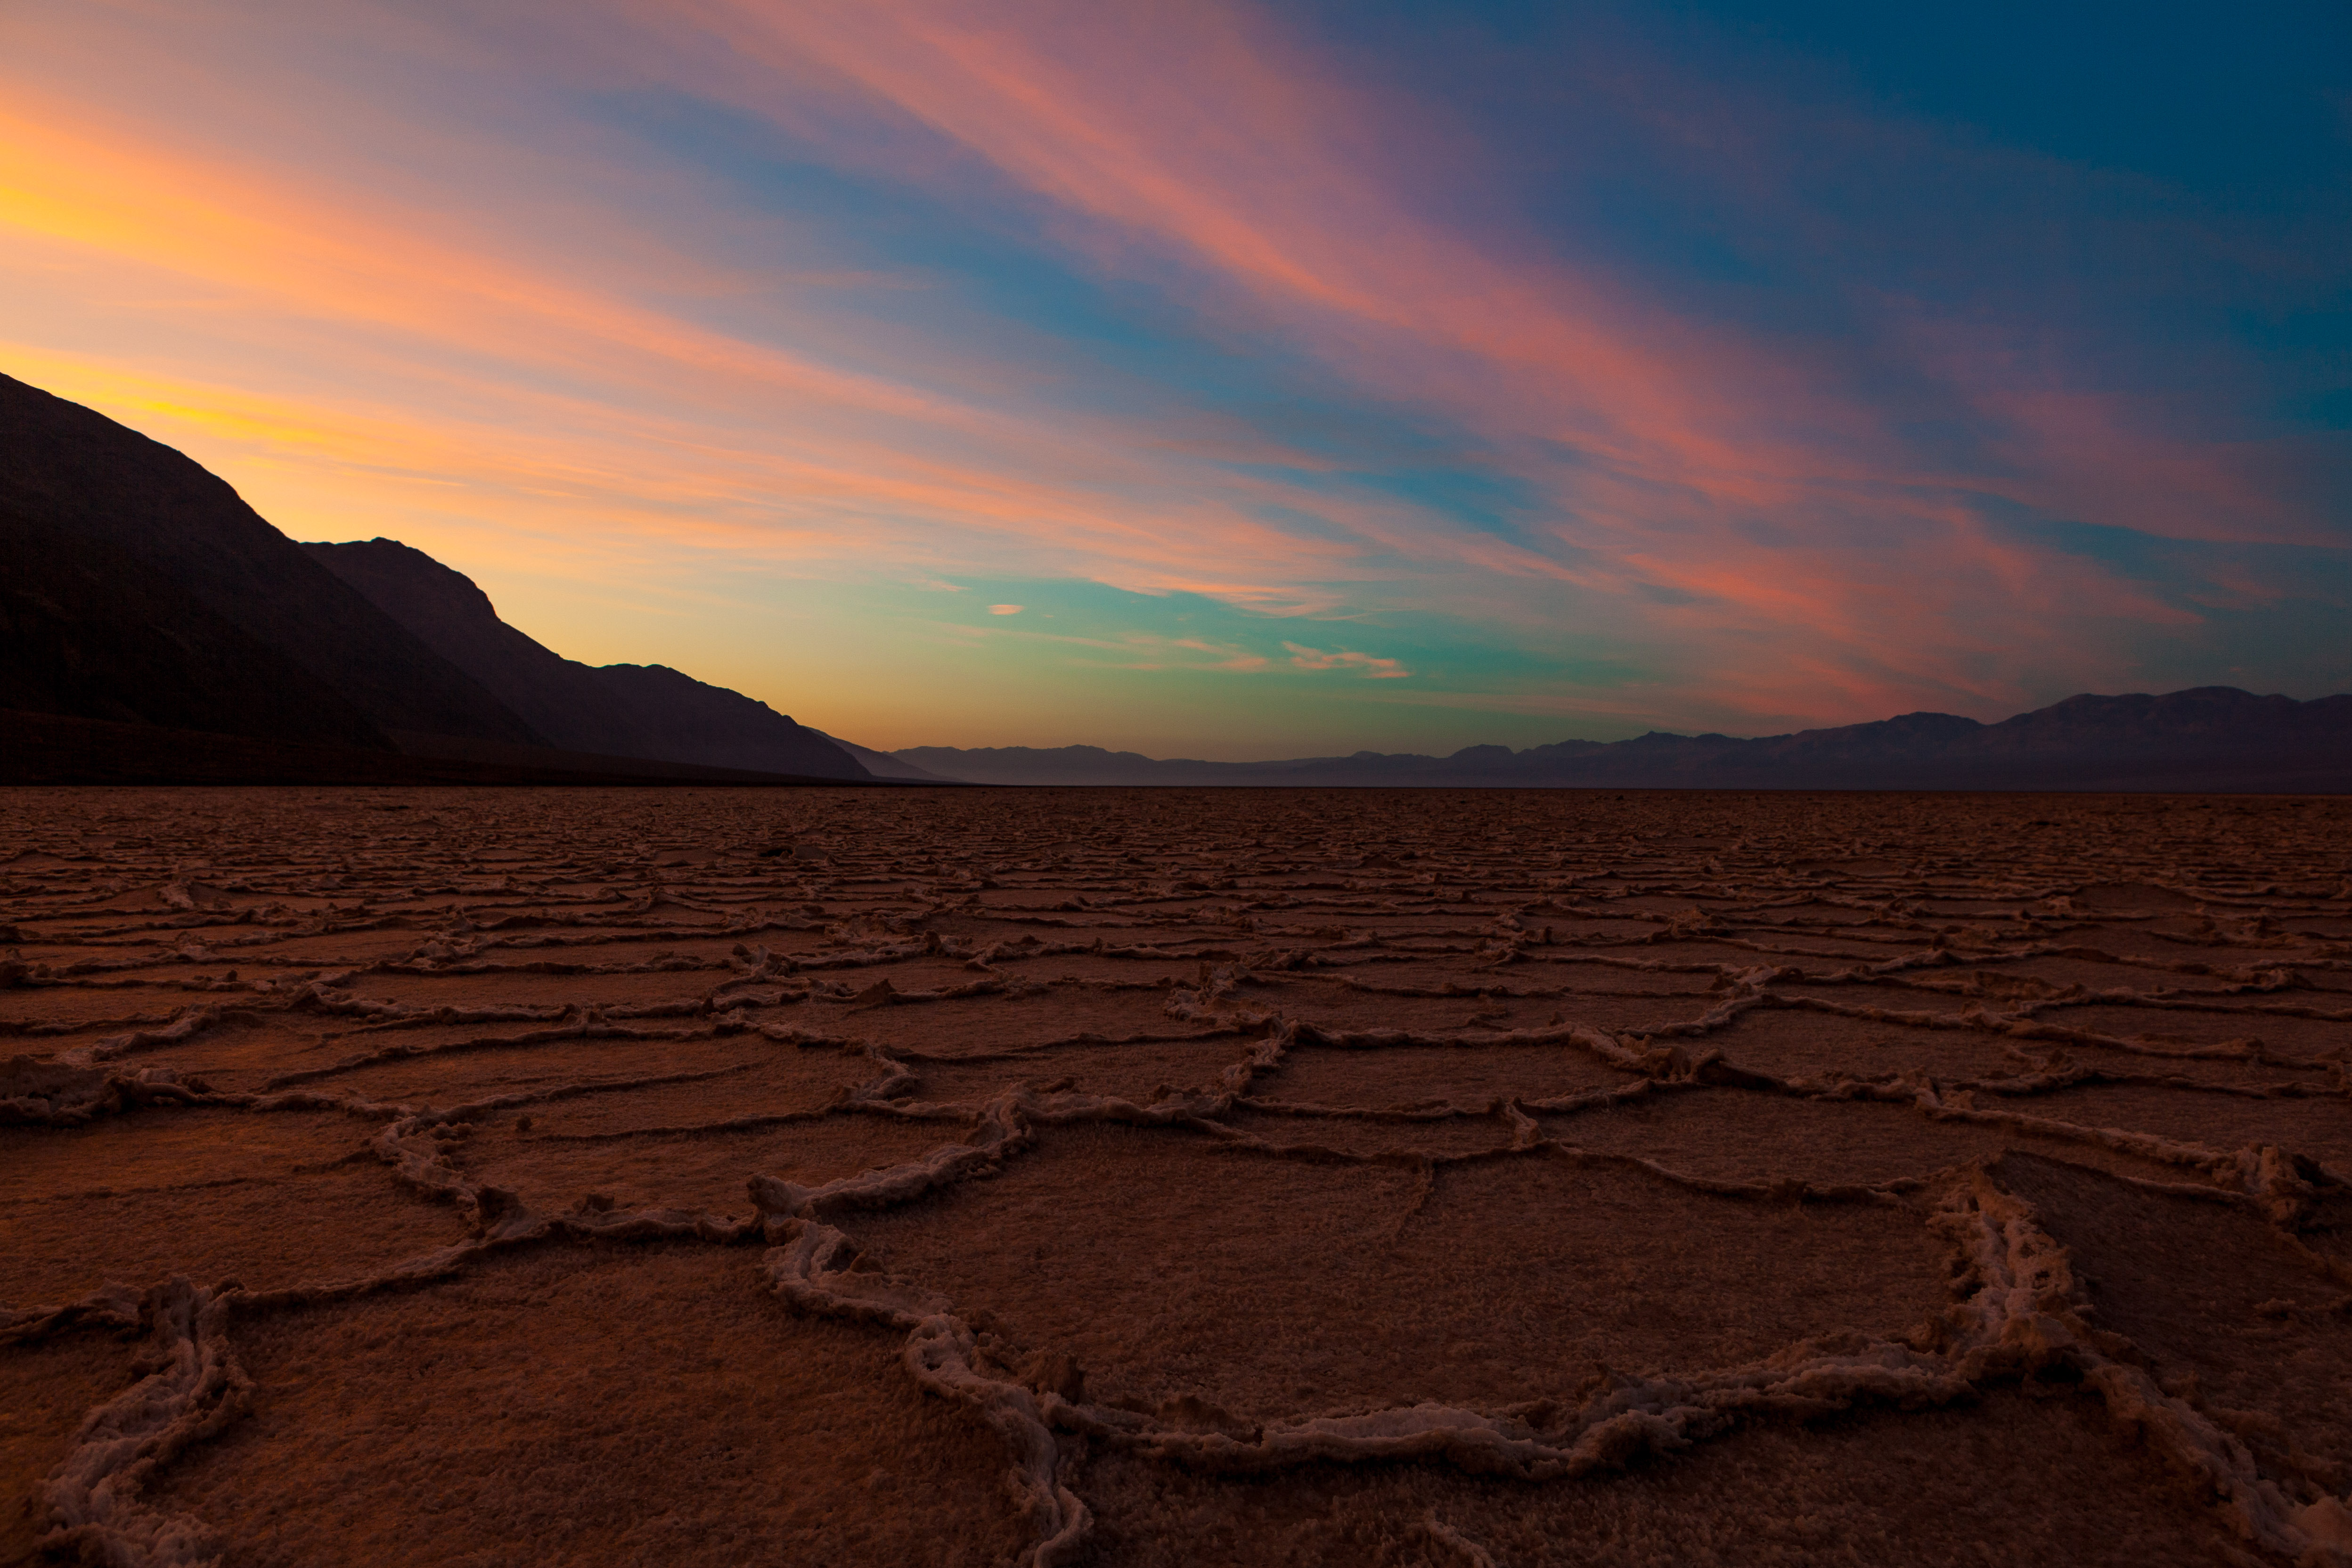 Bad Water Basin Day Break, Death Valley, CA, USA